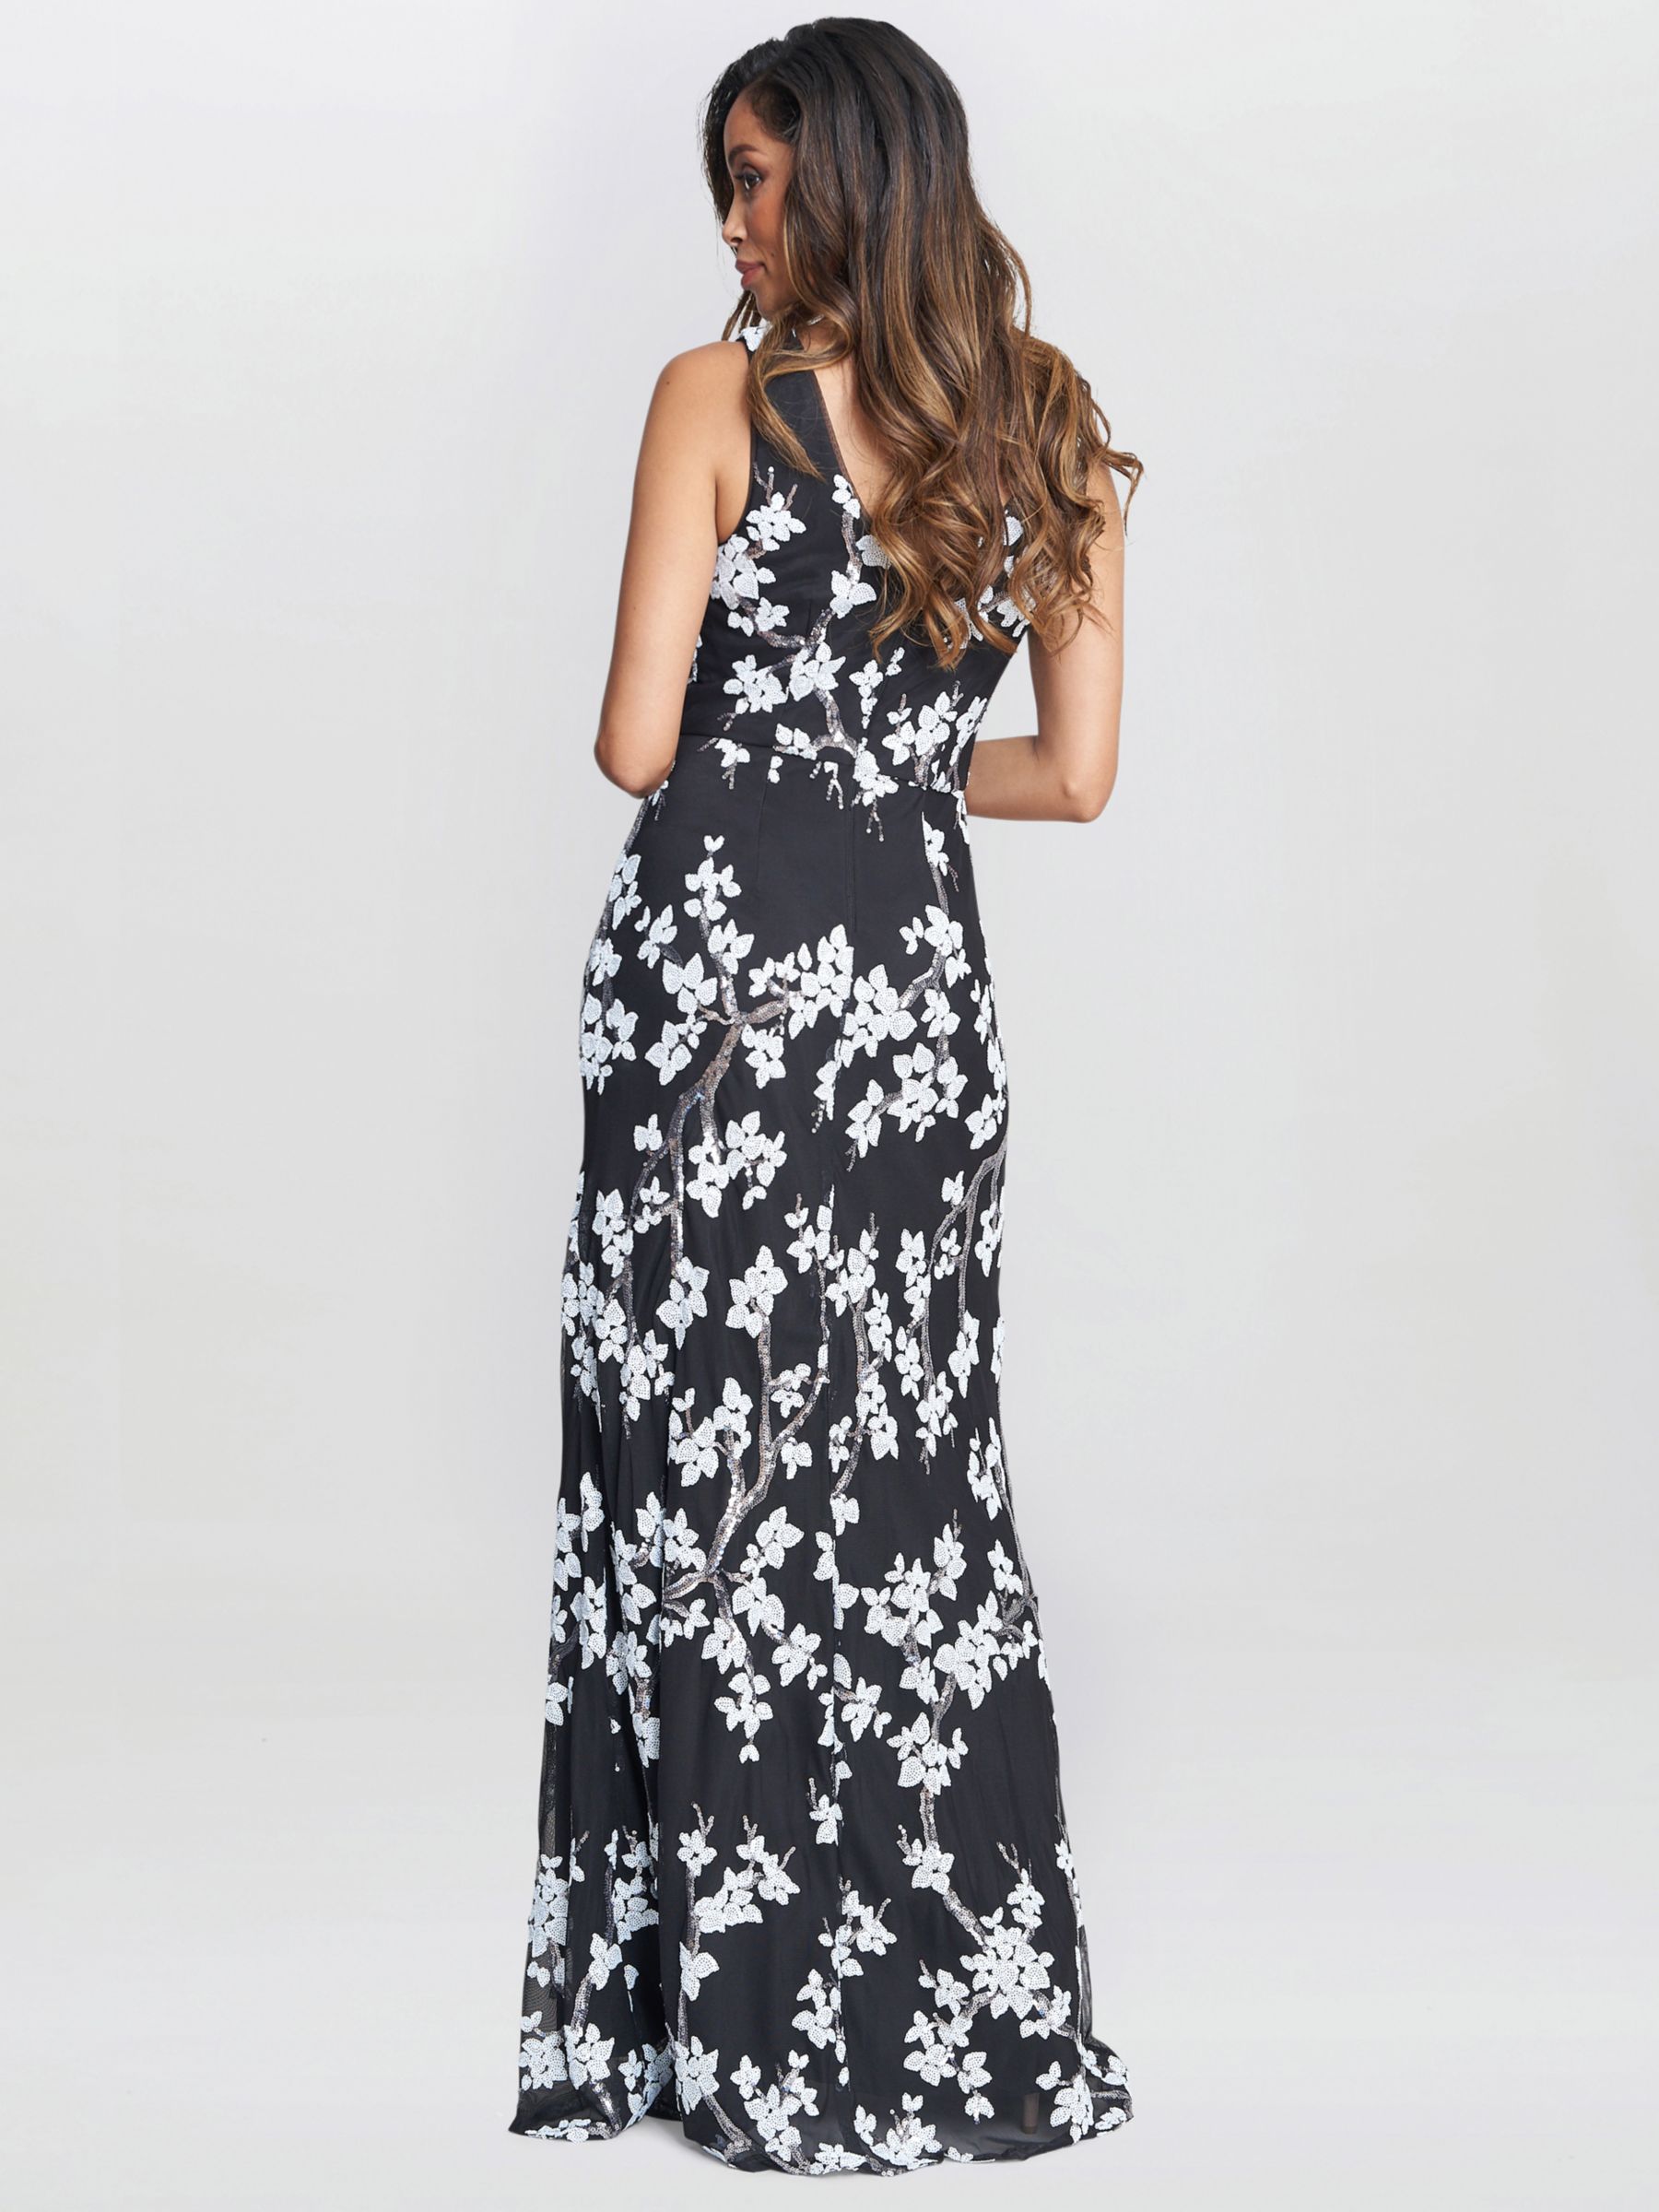 Gina Bacconi Flavia Floral Maxi Dress, Black/White, 8